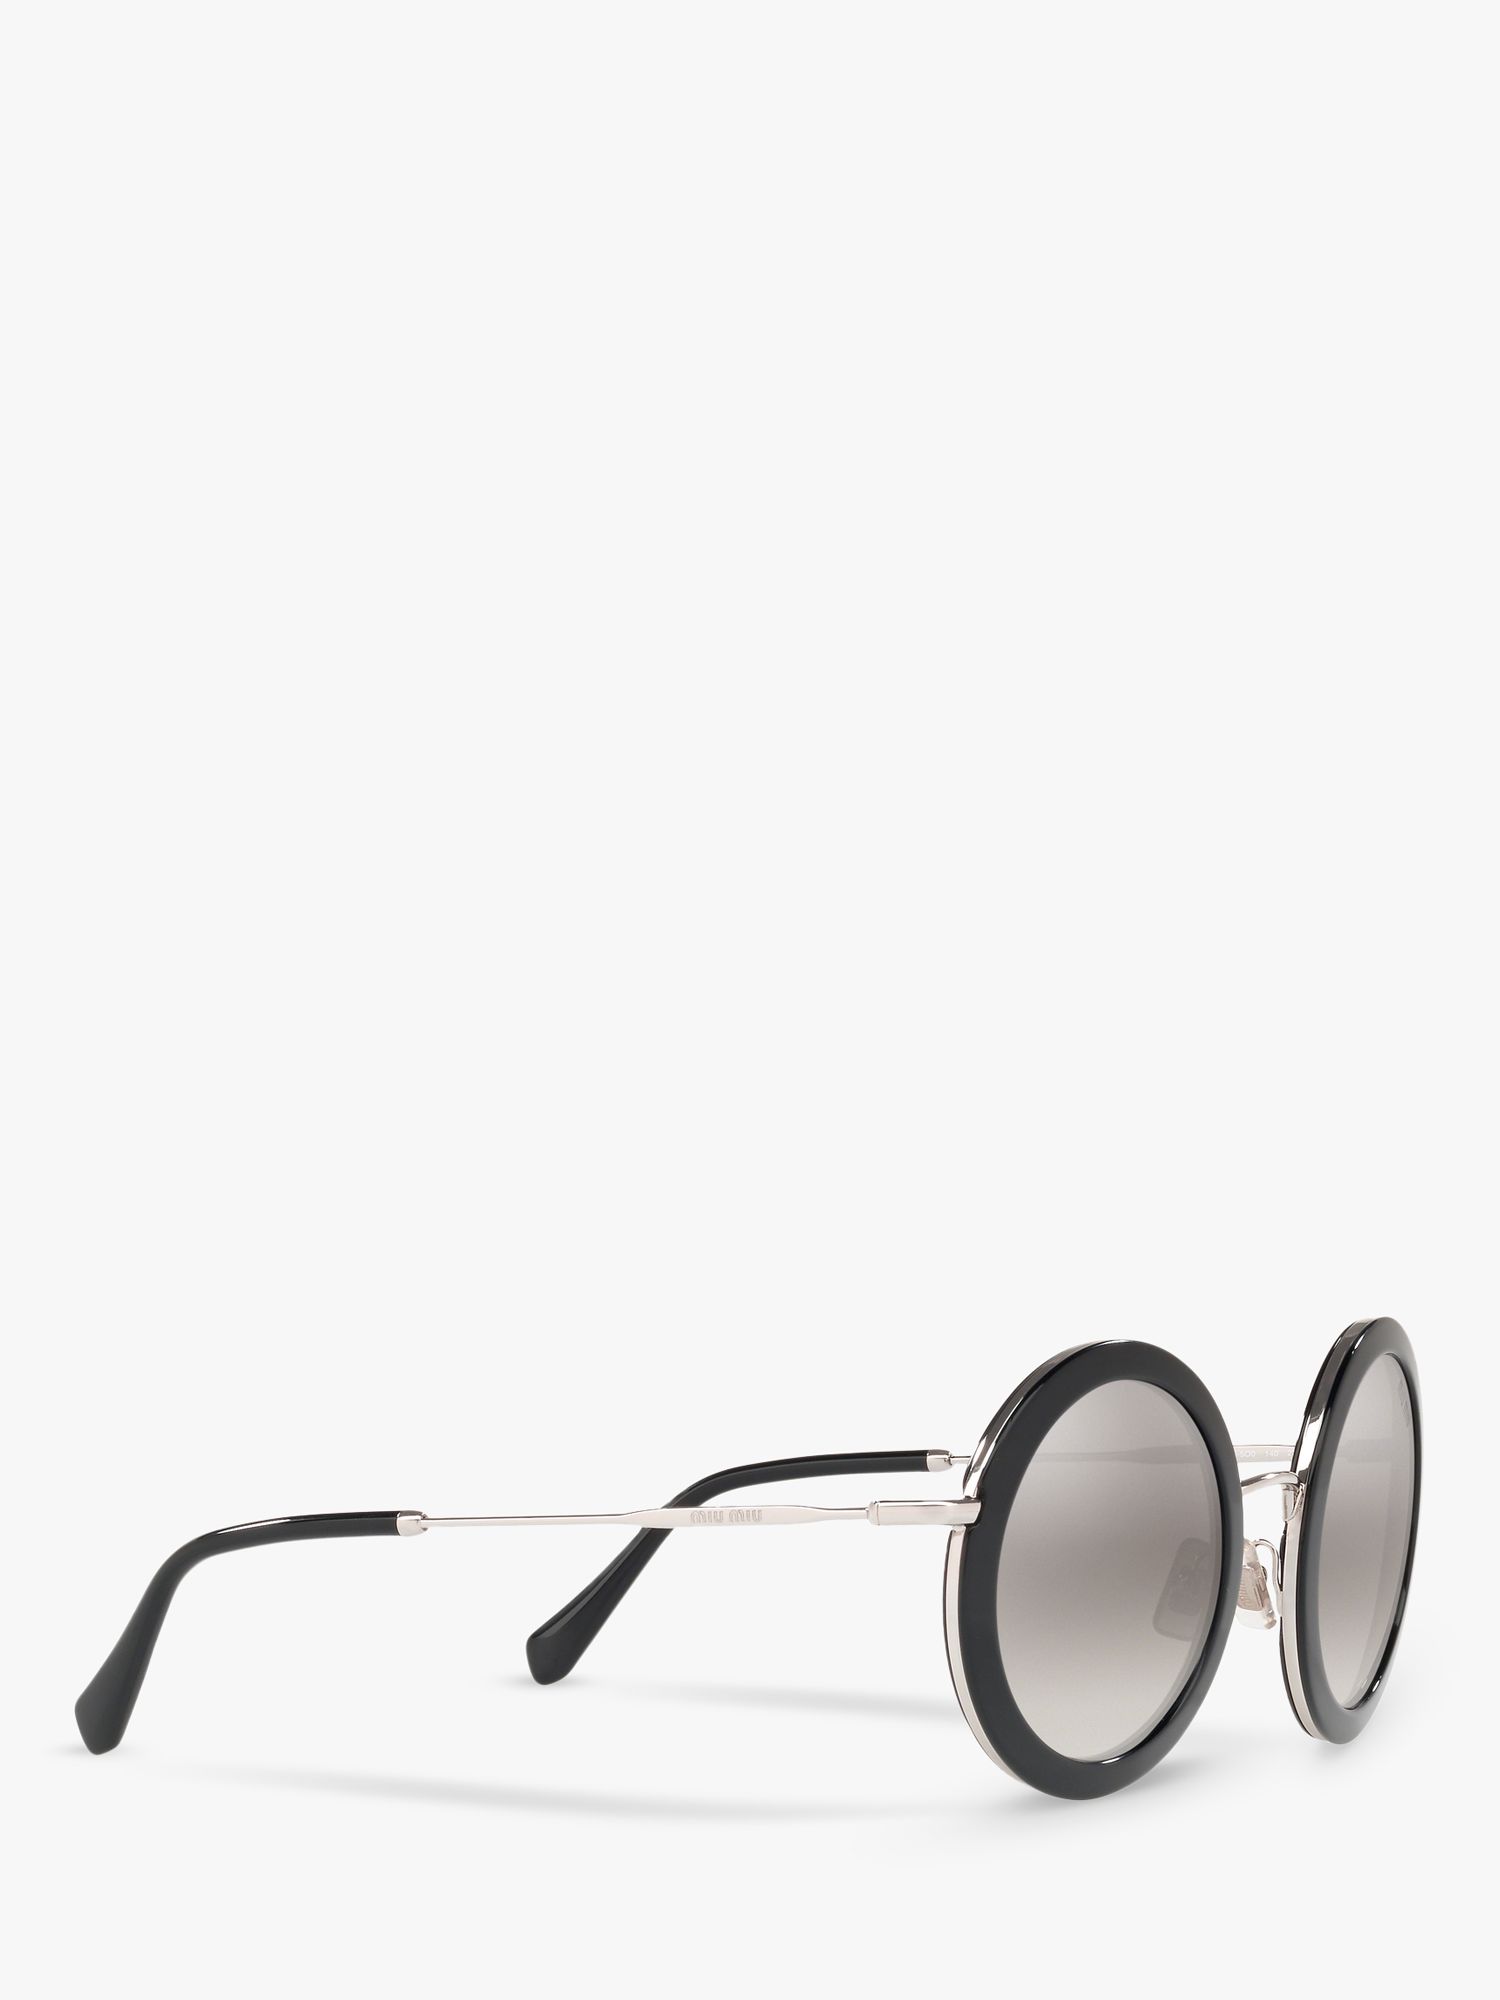 Miu Miu MU 59US Women's Round Sunglasses, Black/Mirror Grey